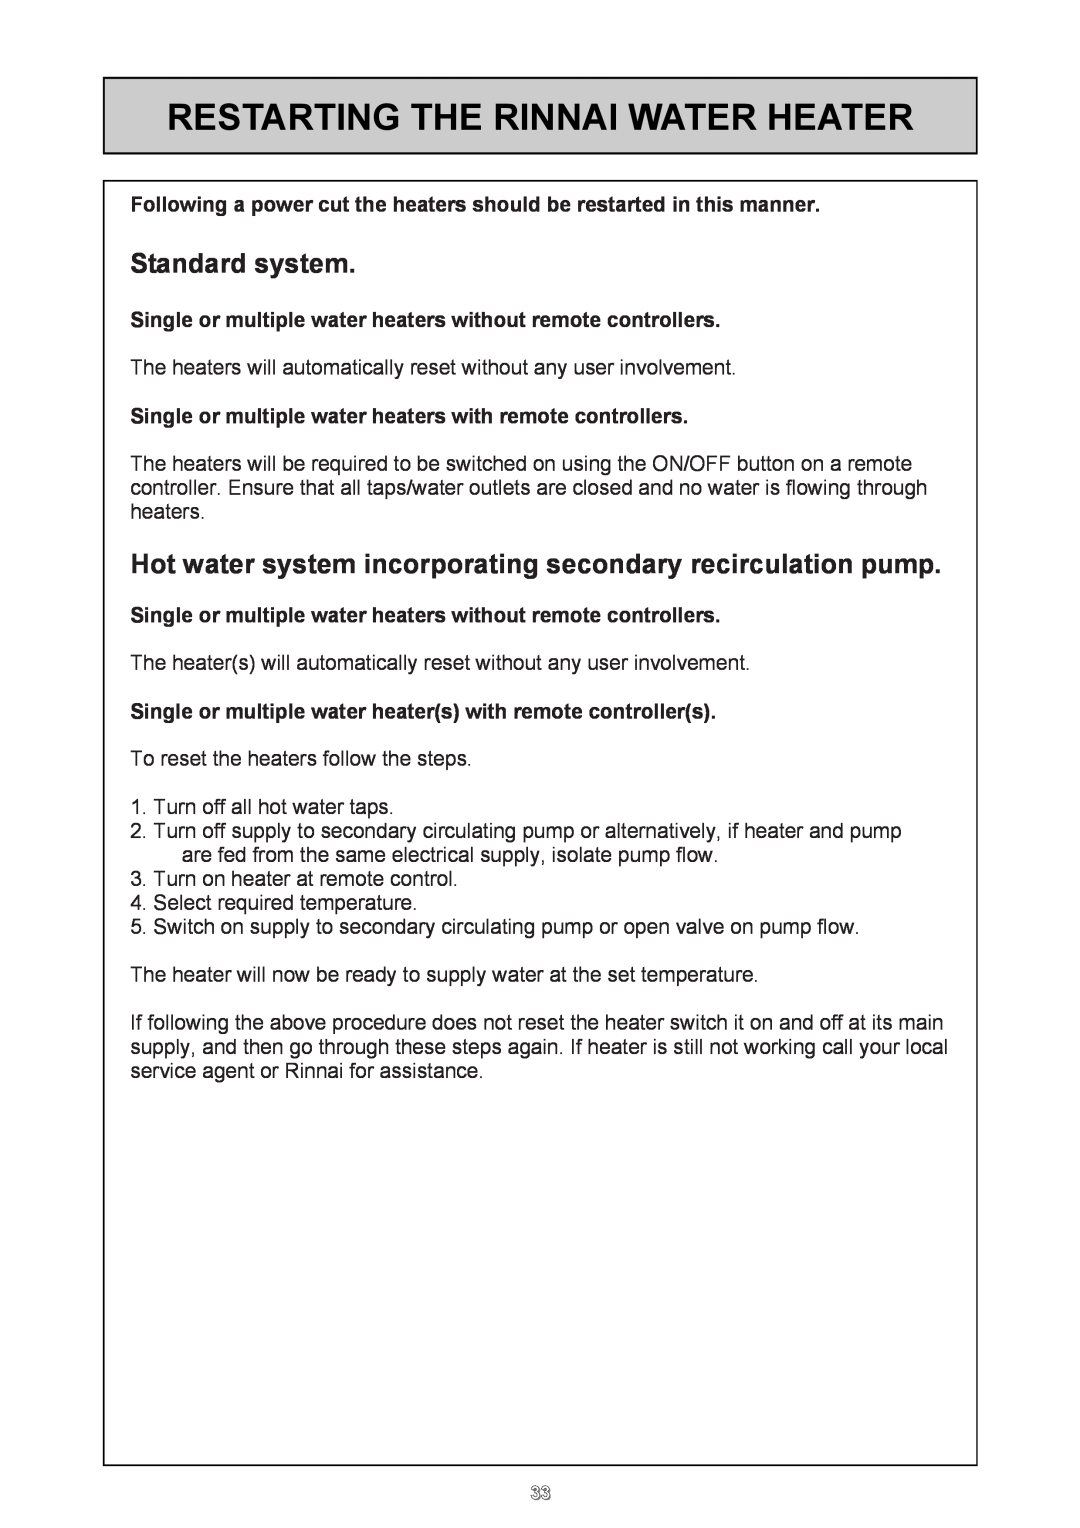 Rinnai 24e user manual Restarting The Rinnai Water Heater, Standard system 